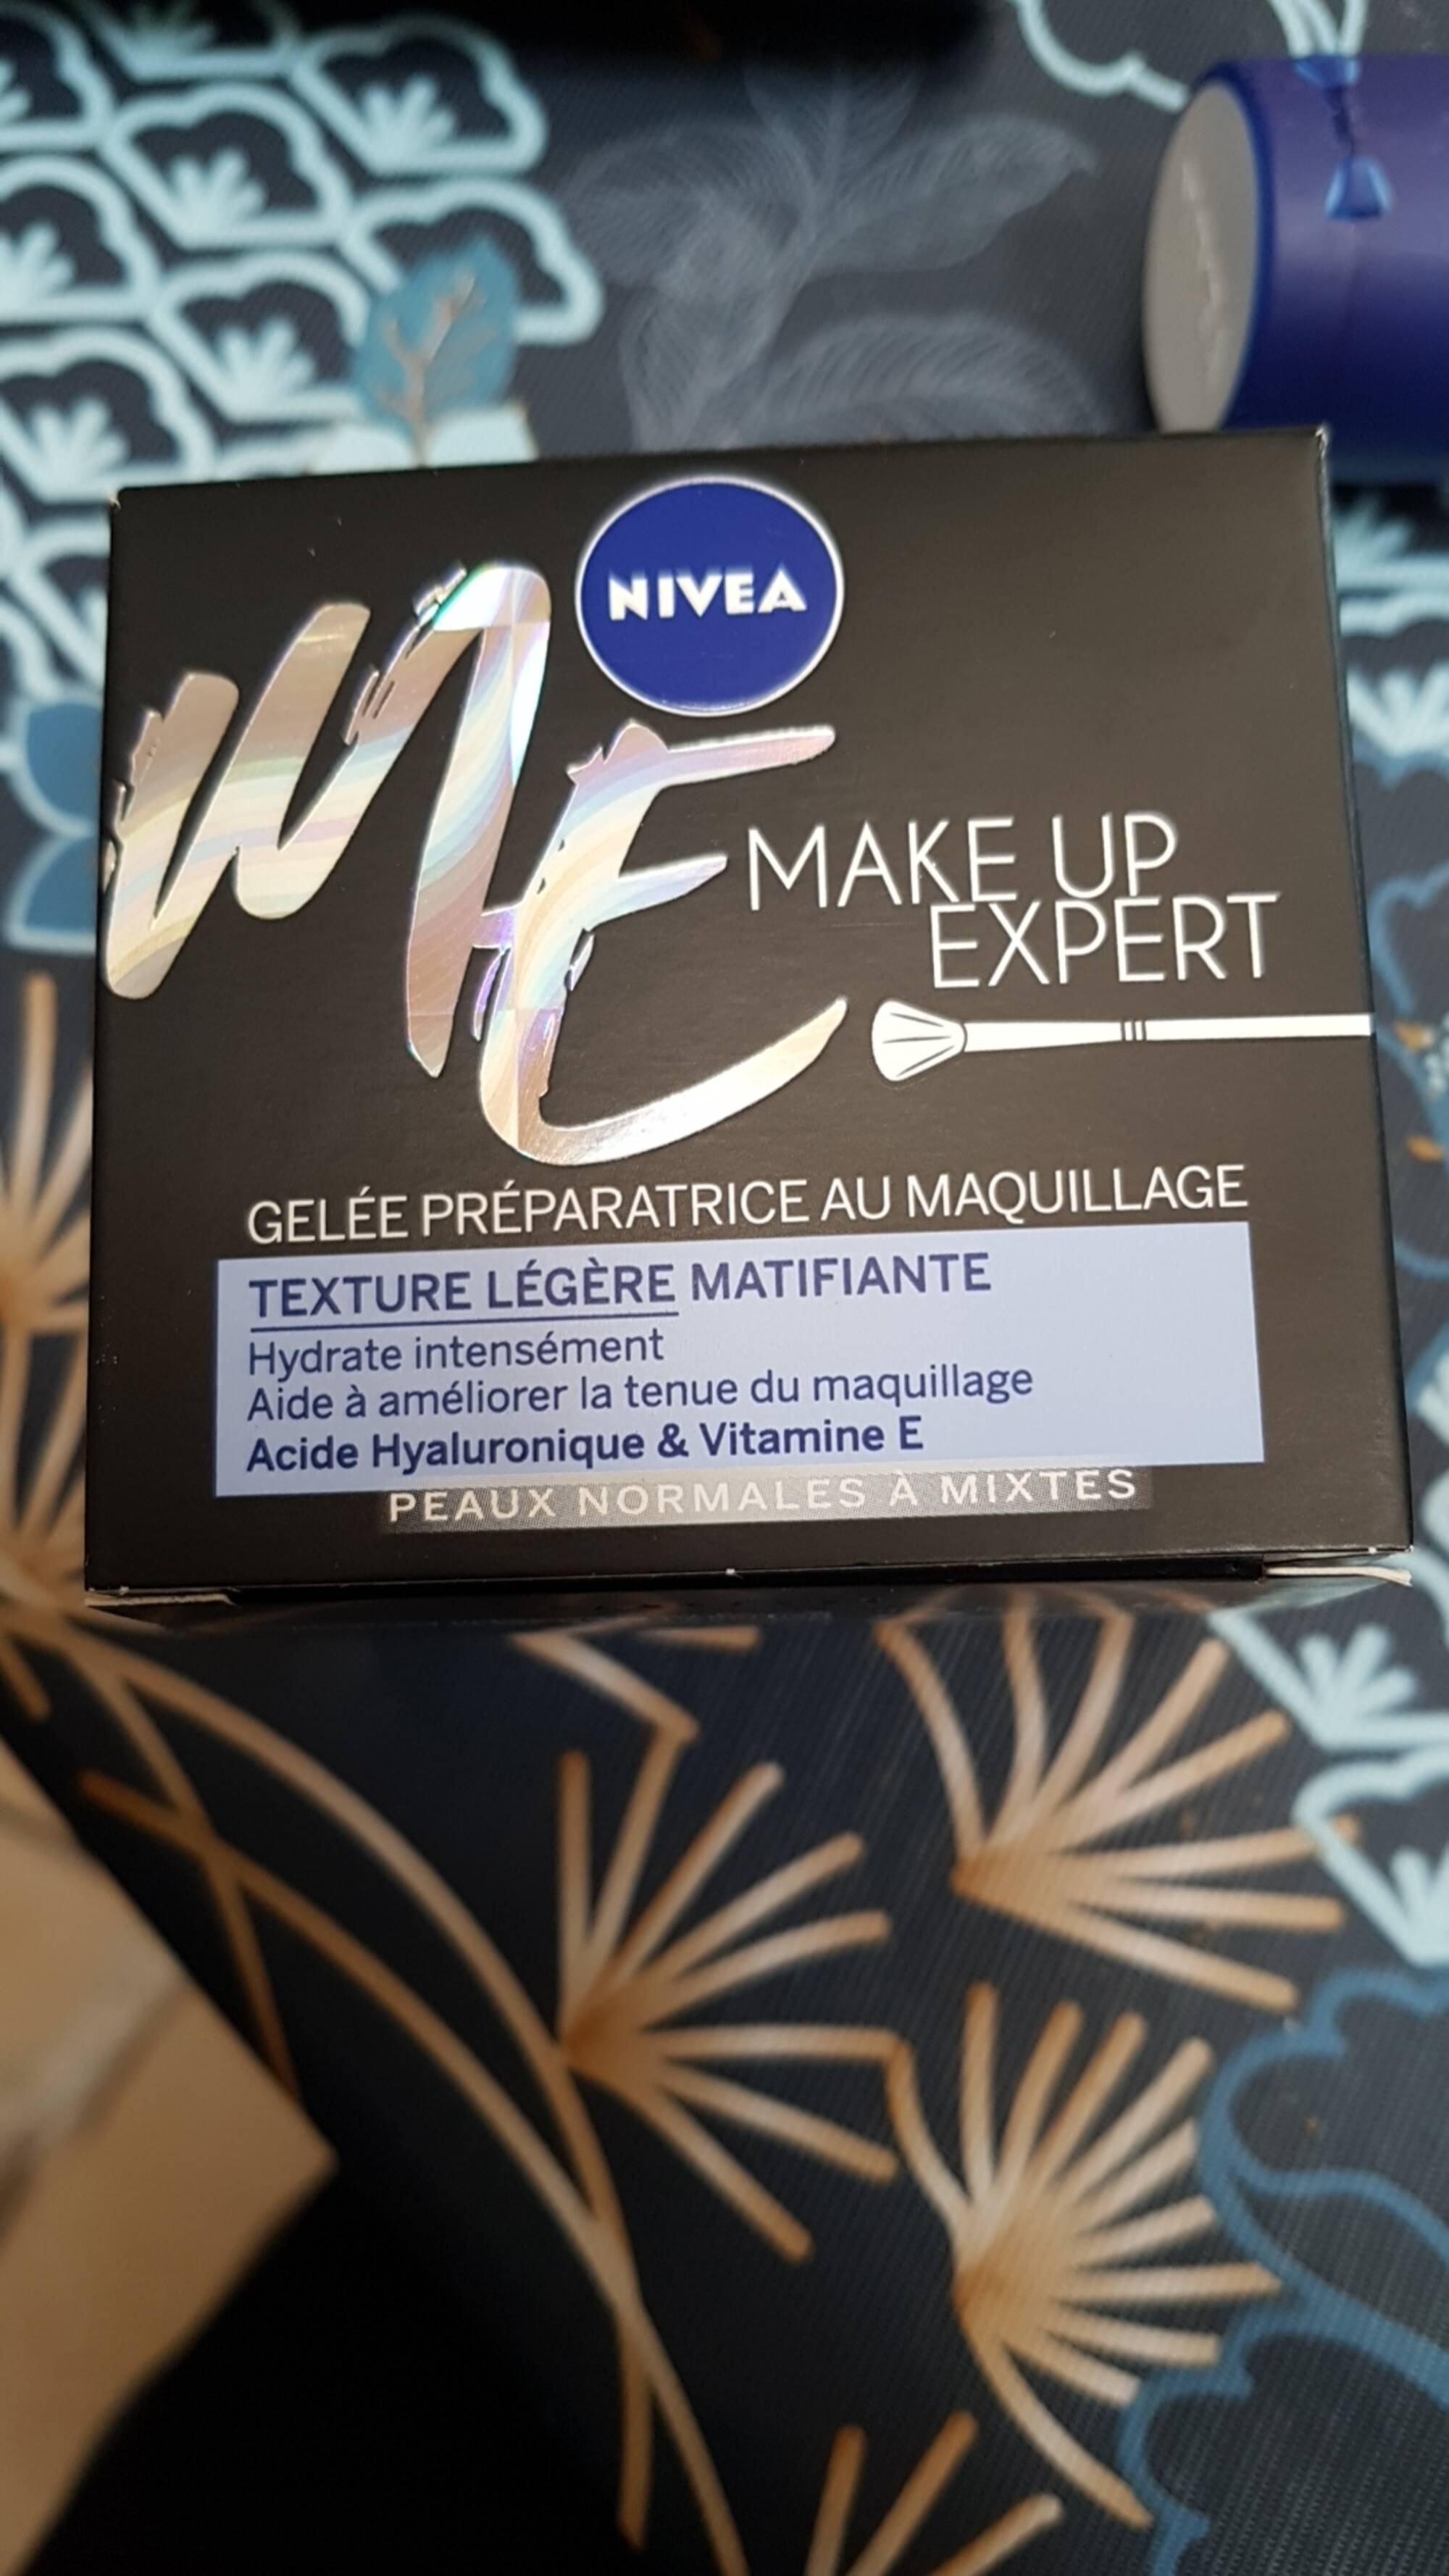 NIVEA - Make up expert - Gelée préparatrice au maquillage